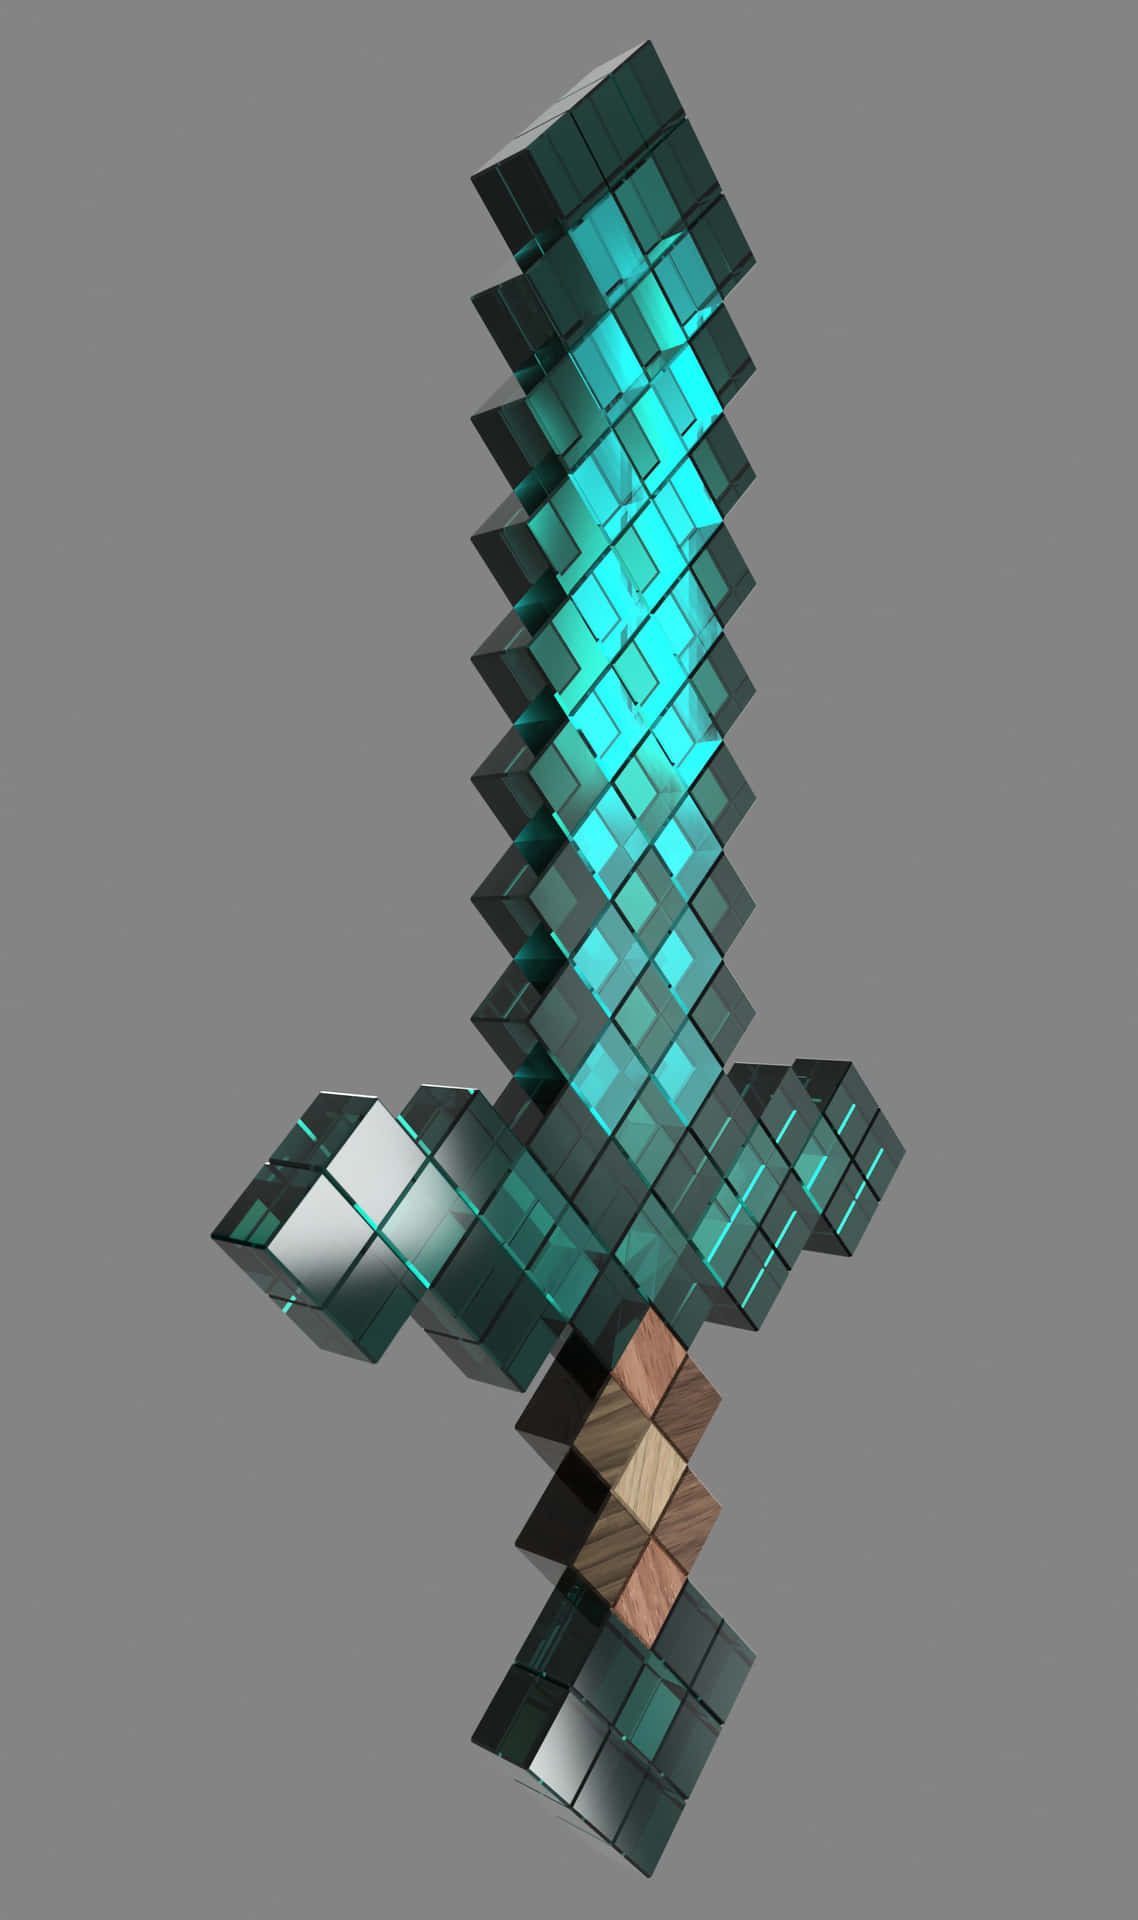 minecraft enchanted diamond sword wallpaper